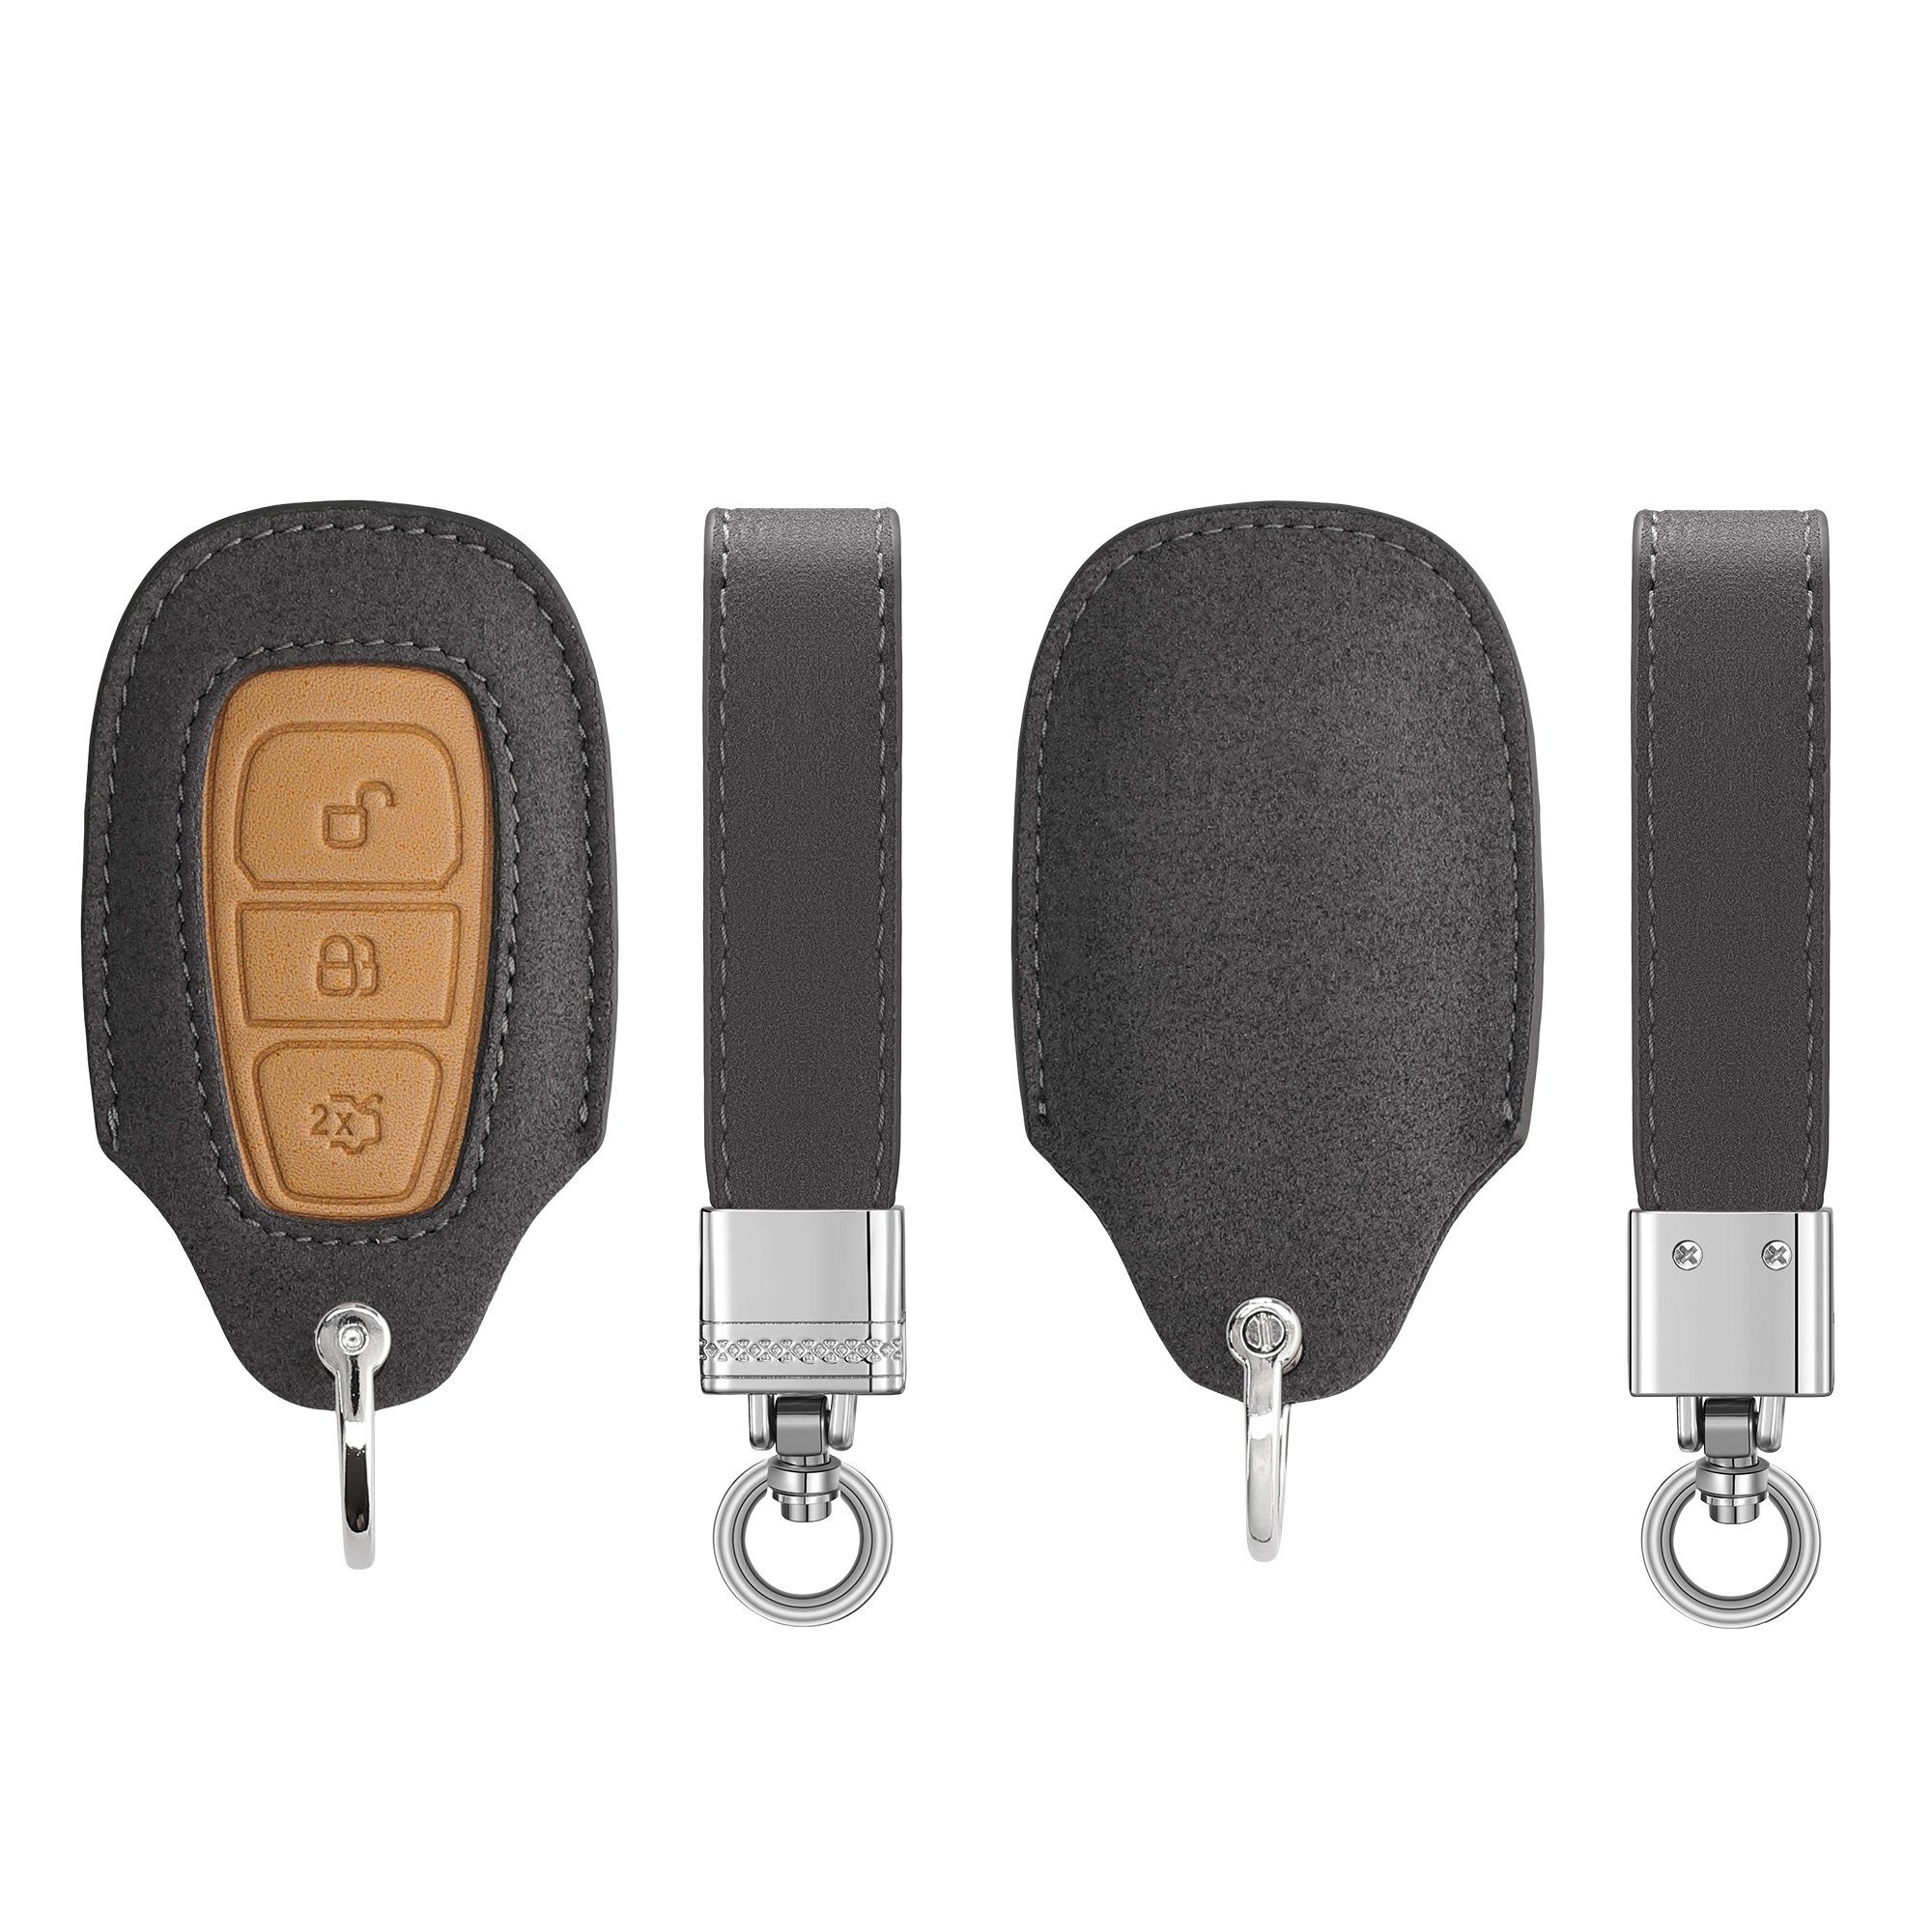 Case für kwmobile Braun Schlüssel Hülle Grau in - Autoschlüssel Ford, Schlüsseltasche Schlüsselhülle Kunstleder Cover